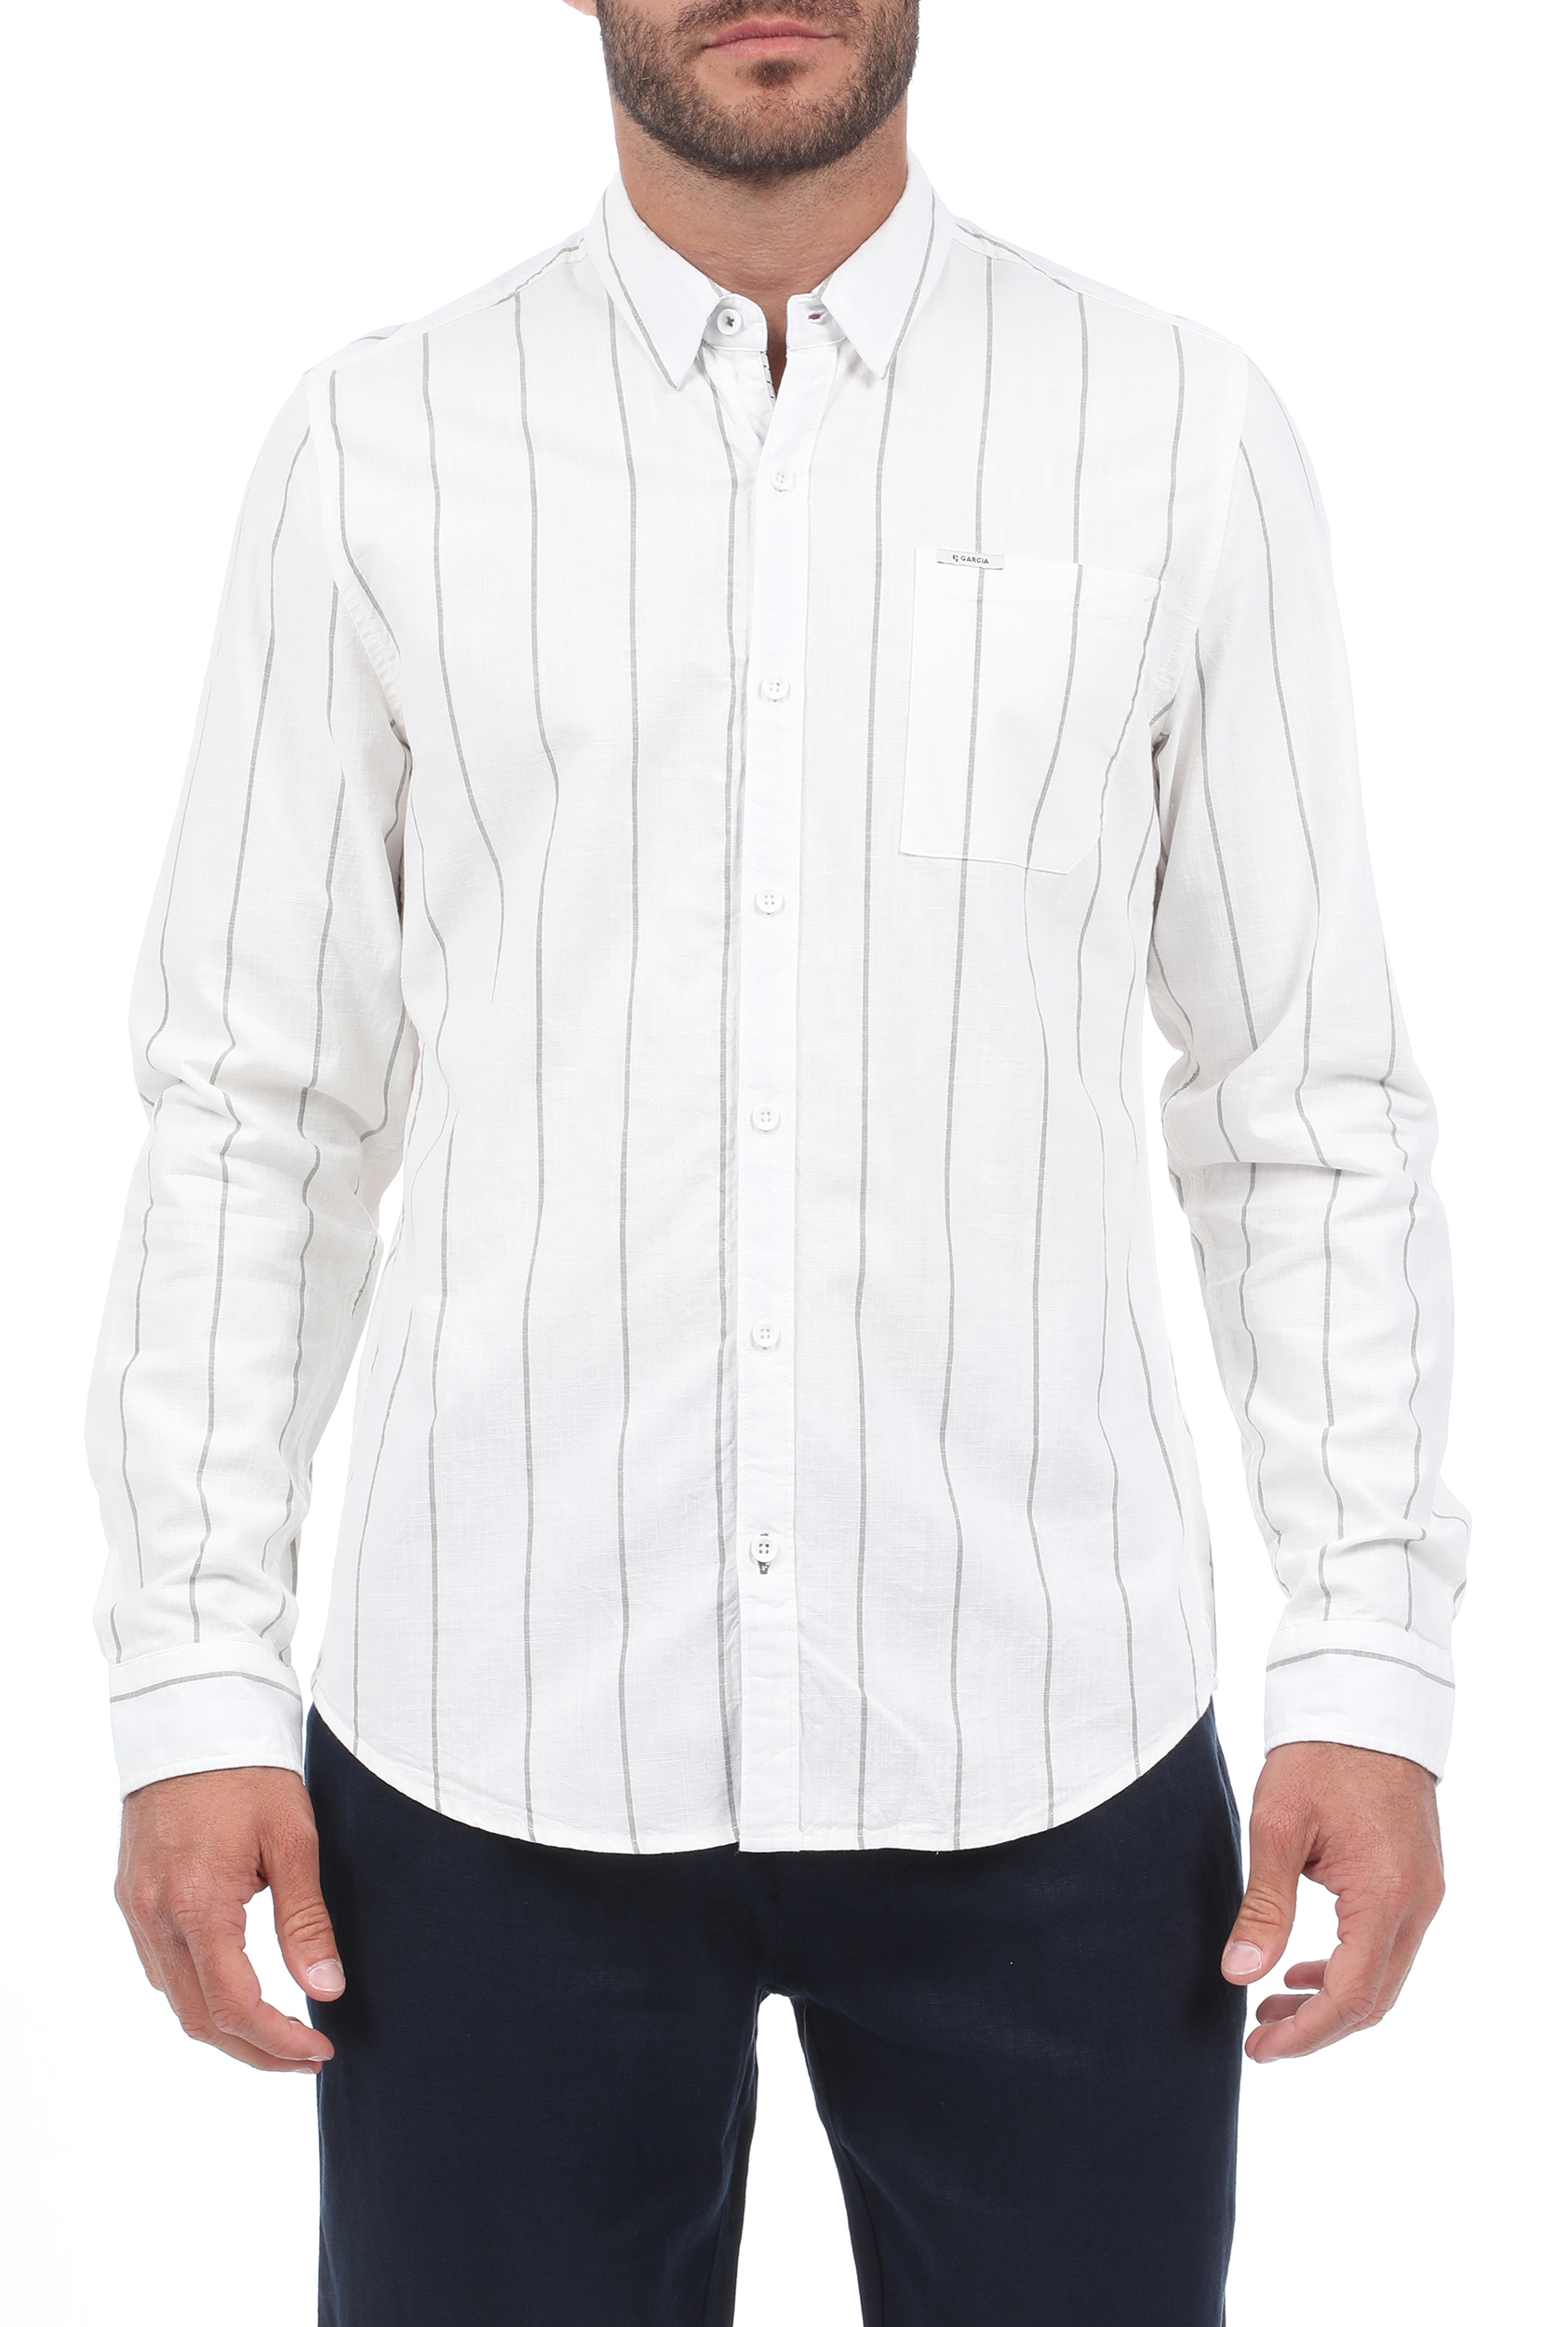 GARCIA JEANS – Ανδρικό πουκάμισο GARCIA JEANS λευκό μπλε 1811389.0-0090